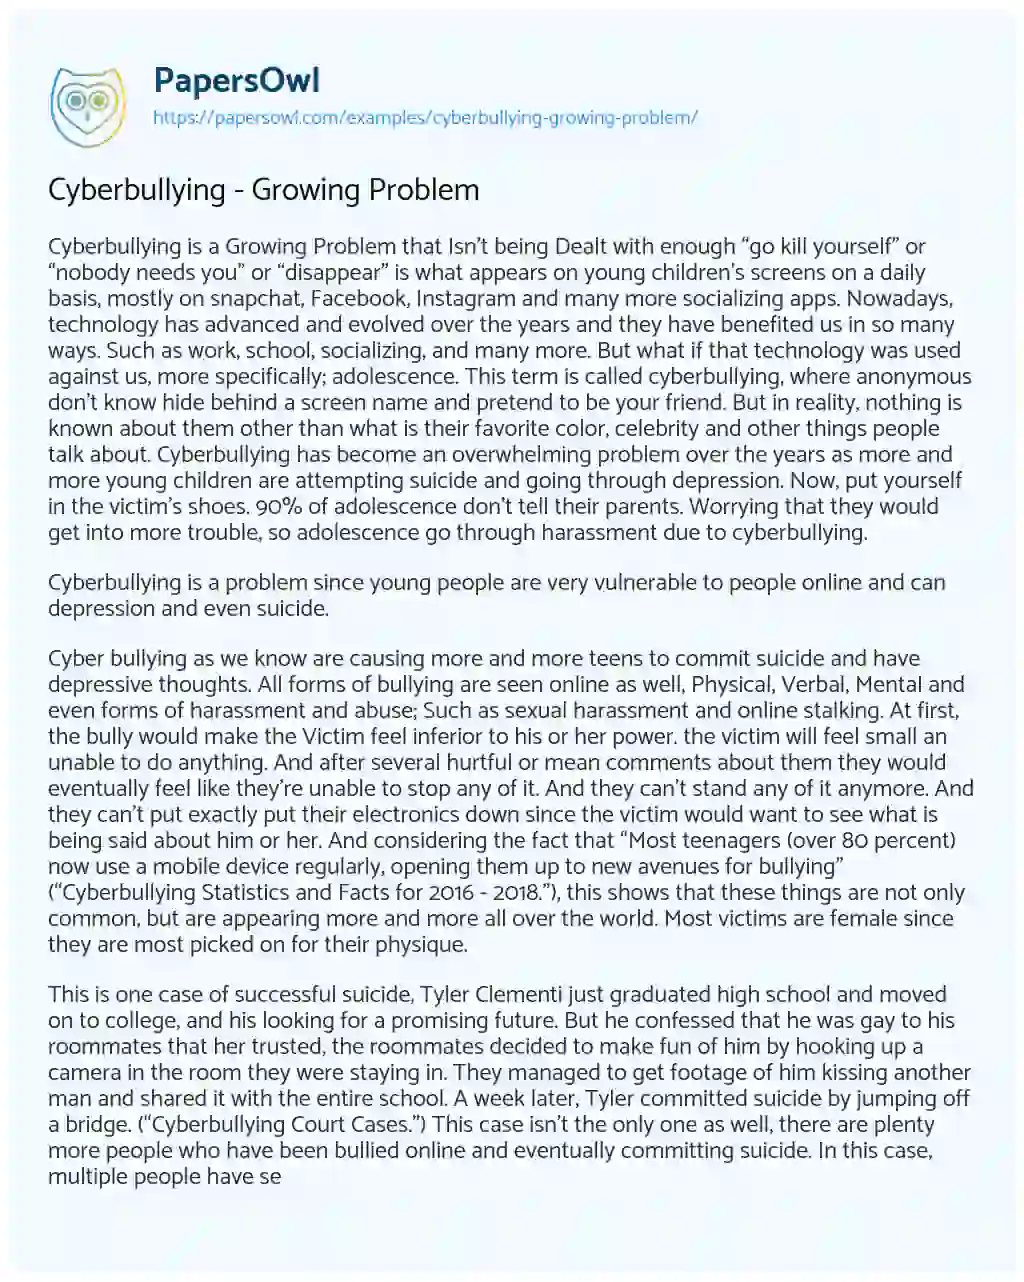 Essay on Cyberbullying – Growing Problem